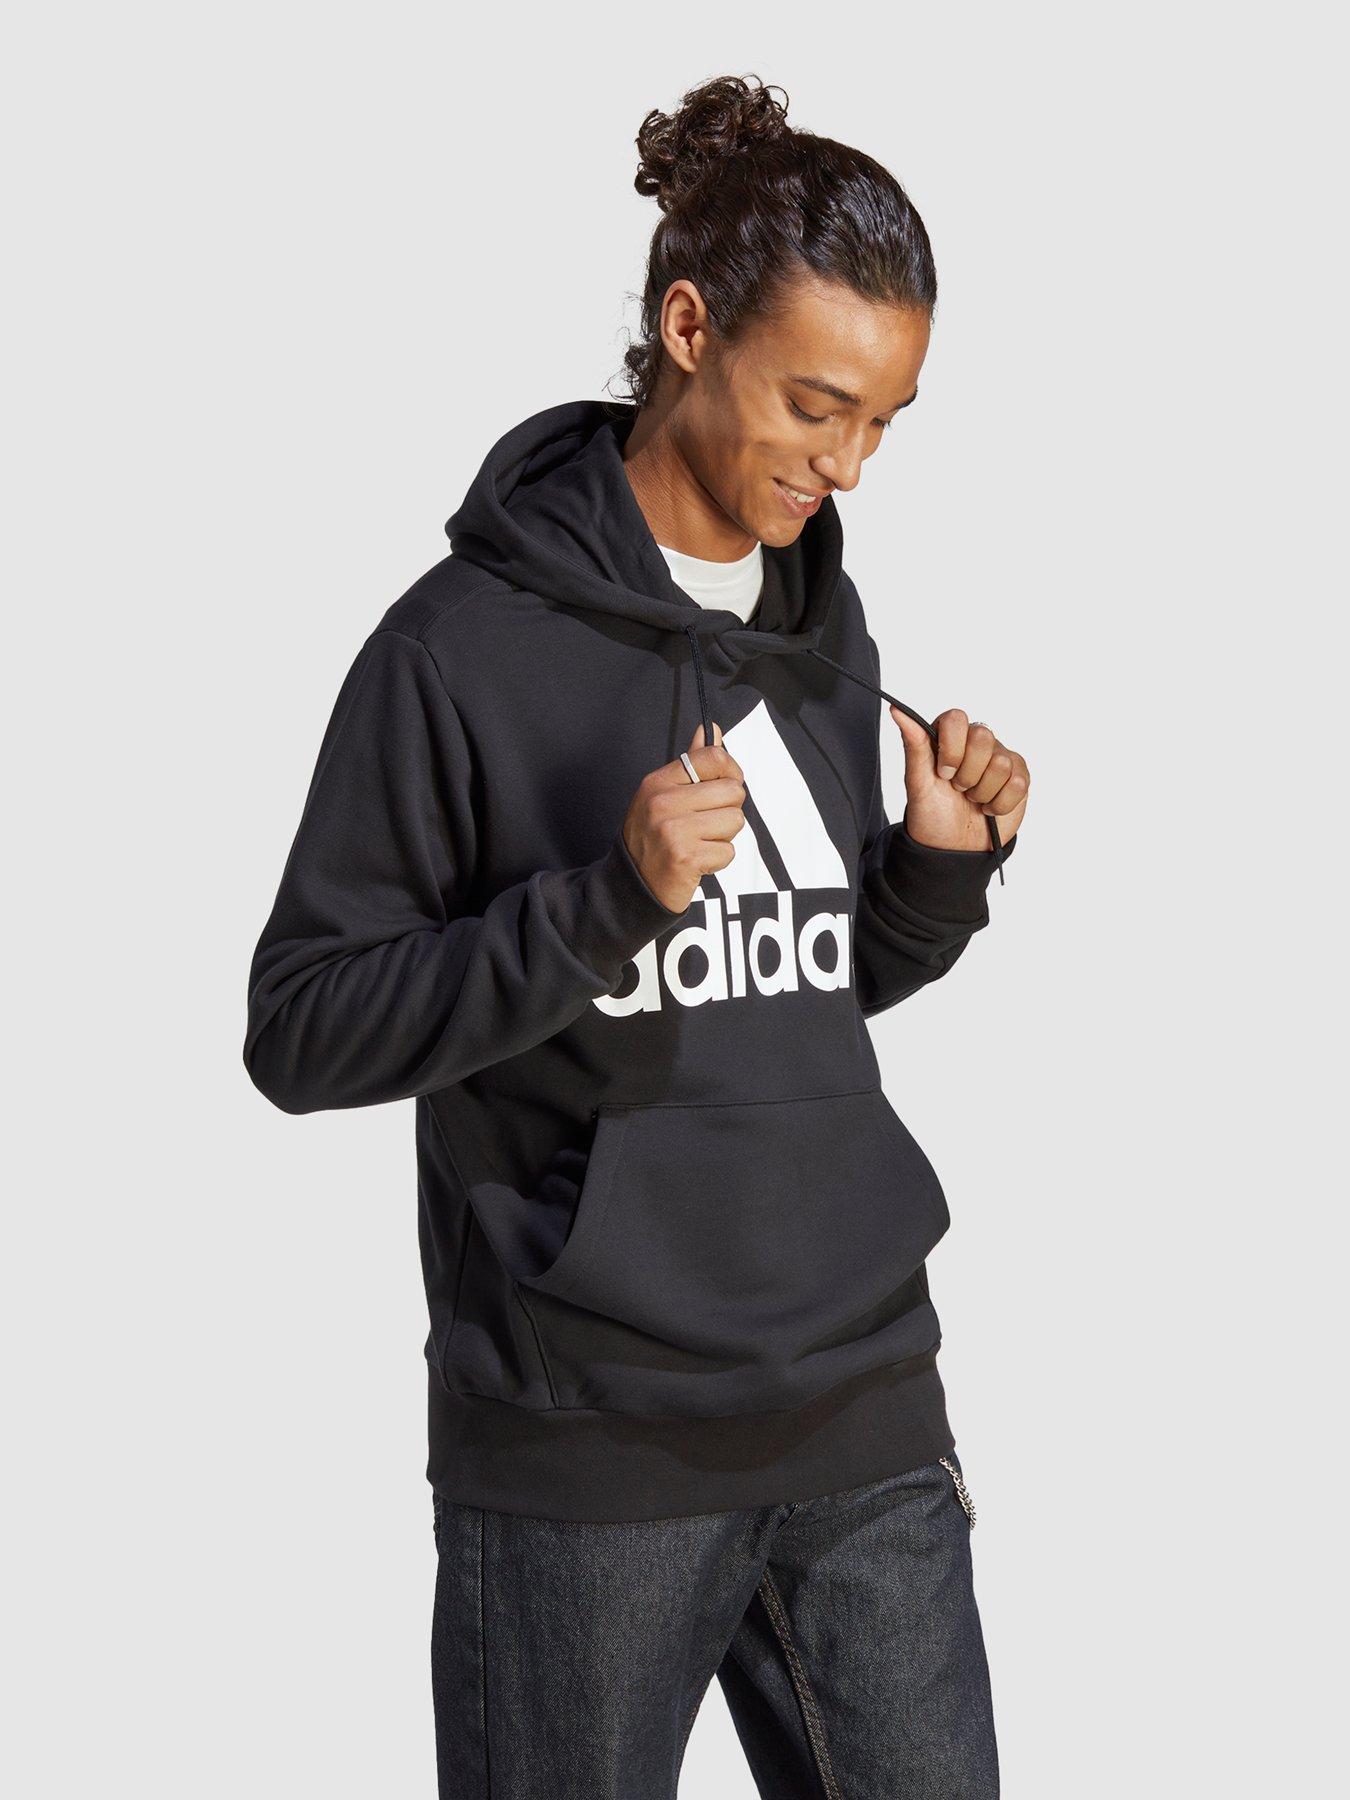 Krigsfanger Mejeriprodukter Creed 4XL | Adidas | Hoodies & sweatshirts | Sportswear | Men | Very Ireland